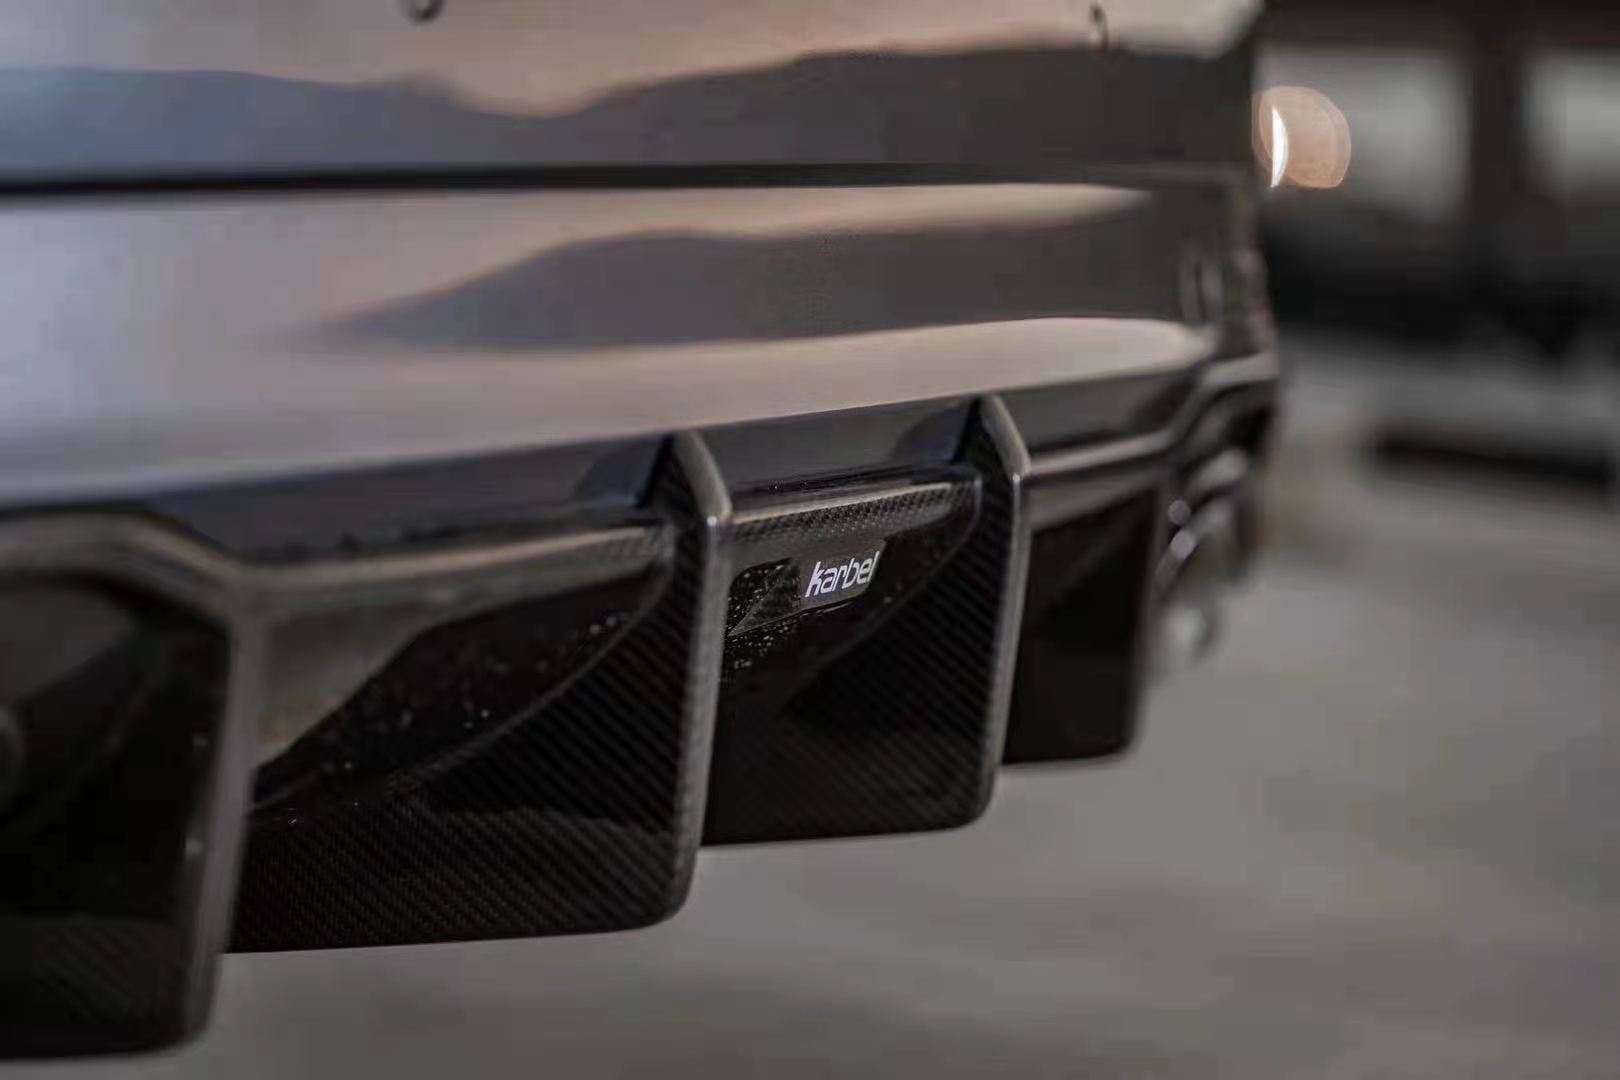 Karbel Dry Carbon Fiber Rear Diffuser for Audi A3 S Line & S3 2017-2020 Sedan